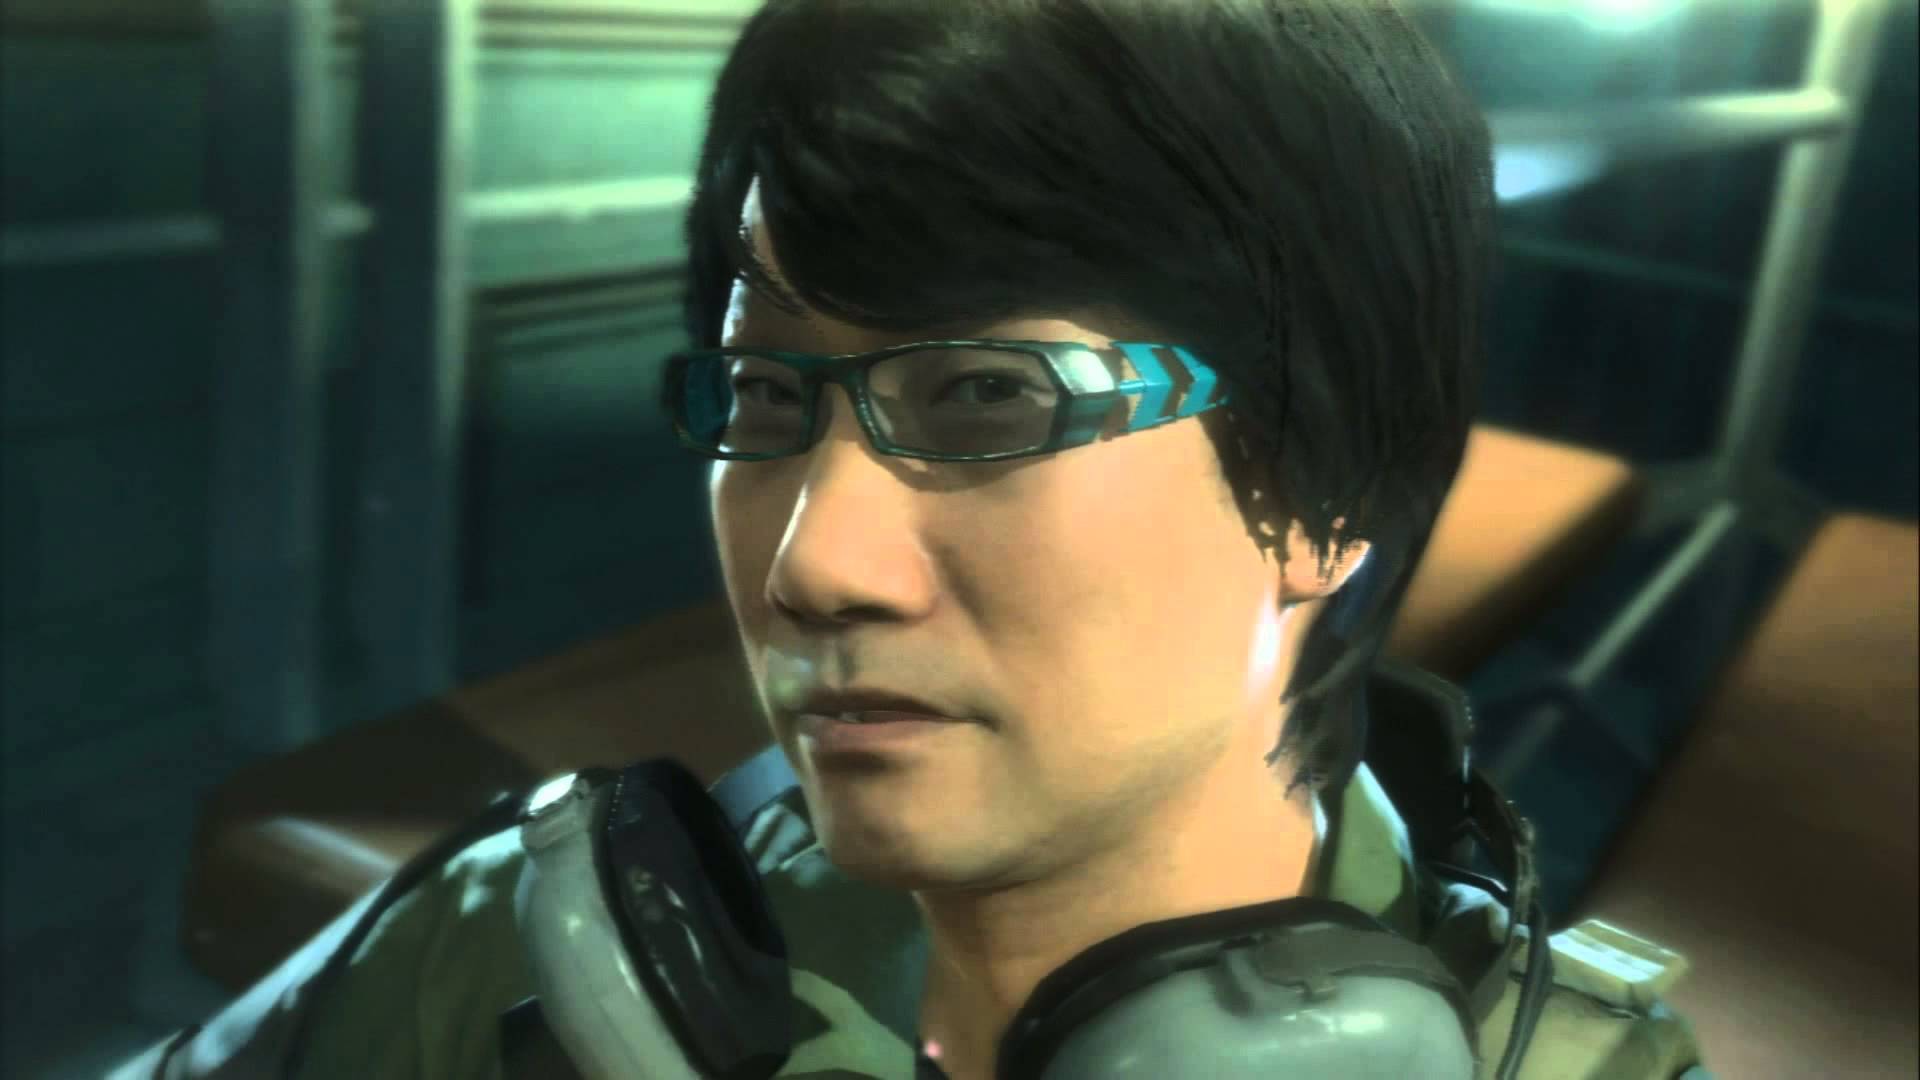 celebrity video game cameos - Metal Gear Solid V: Hideo Kojima